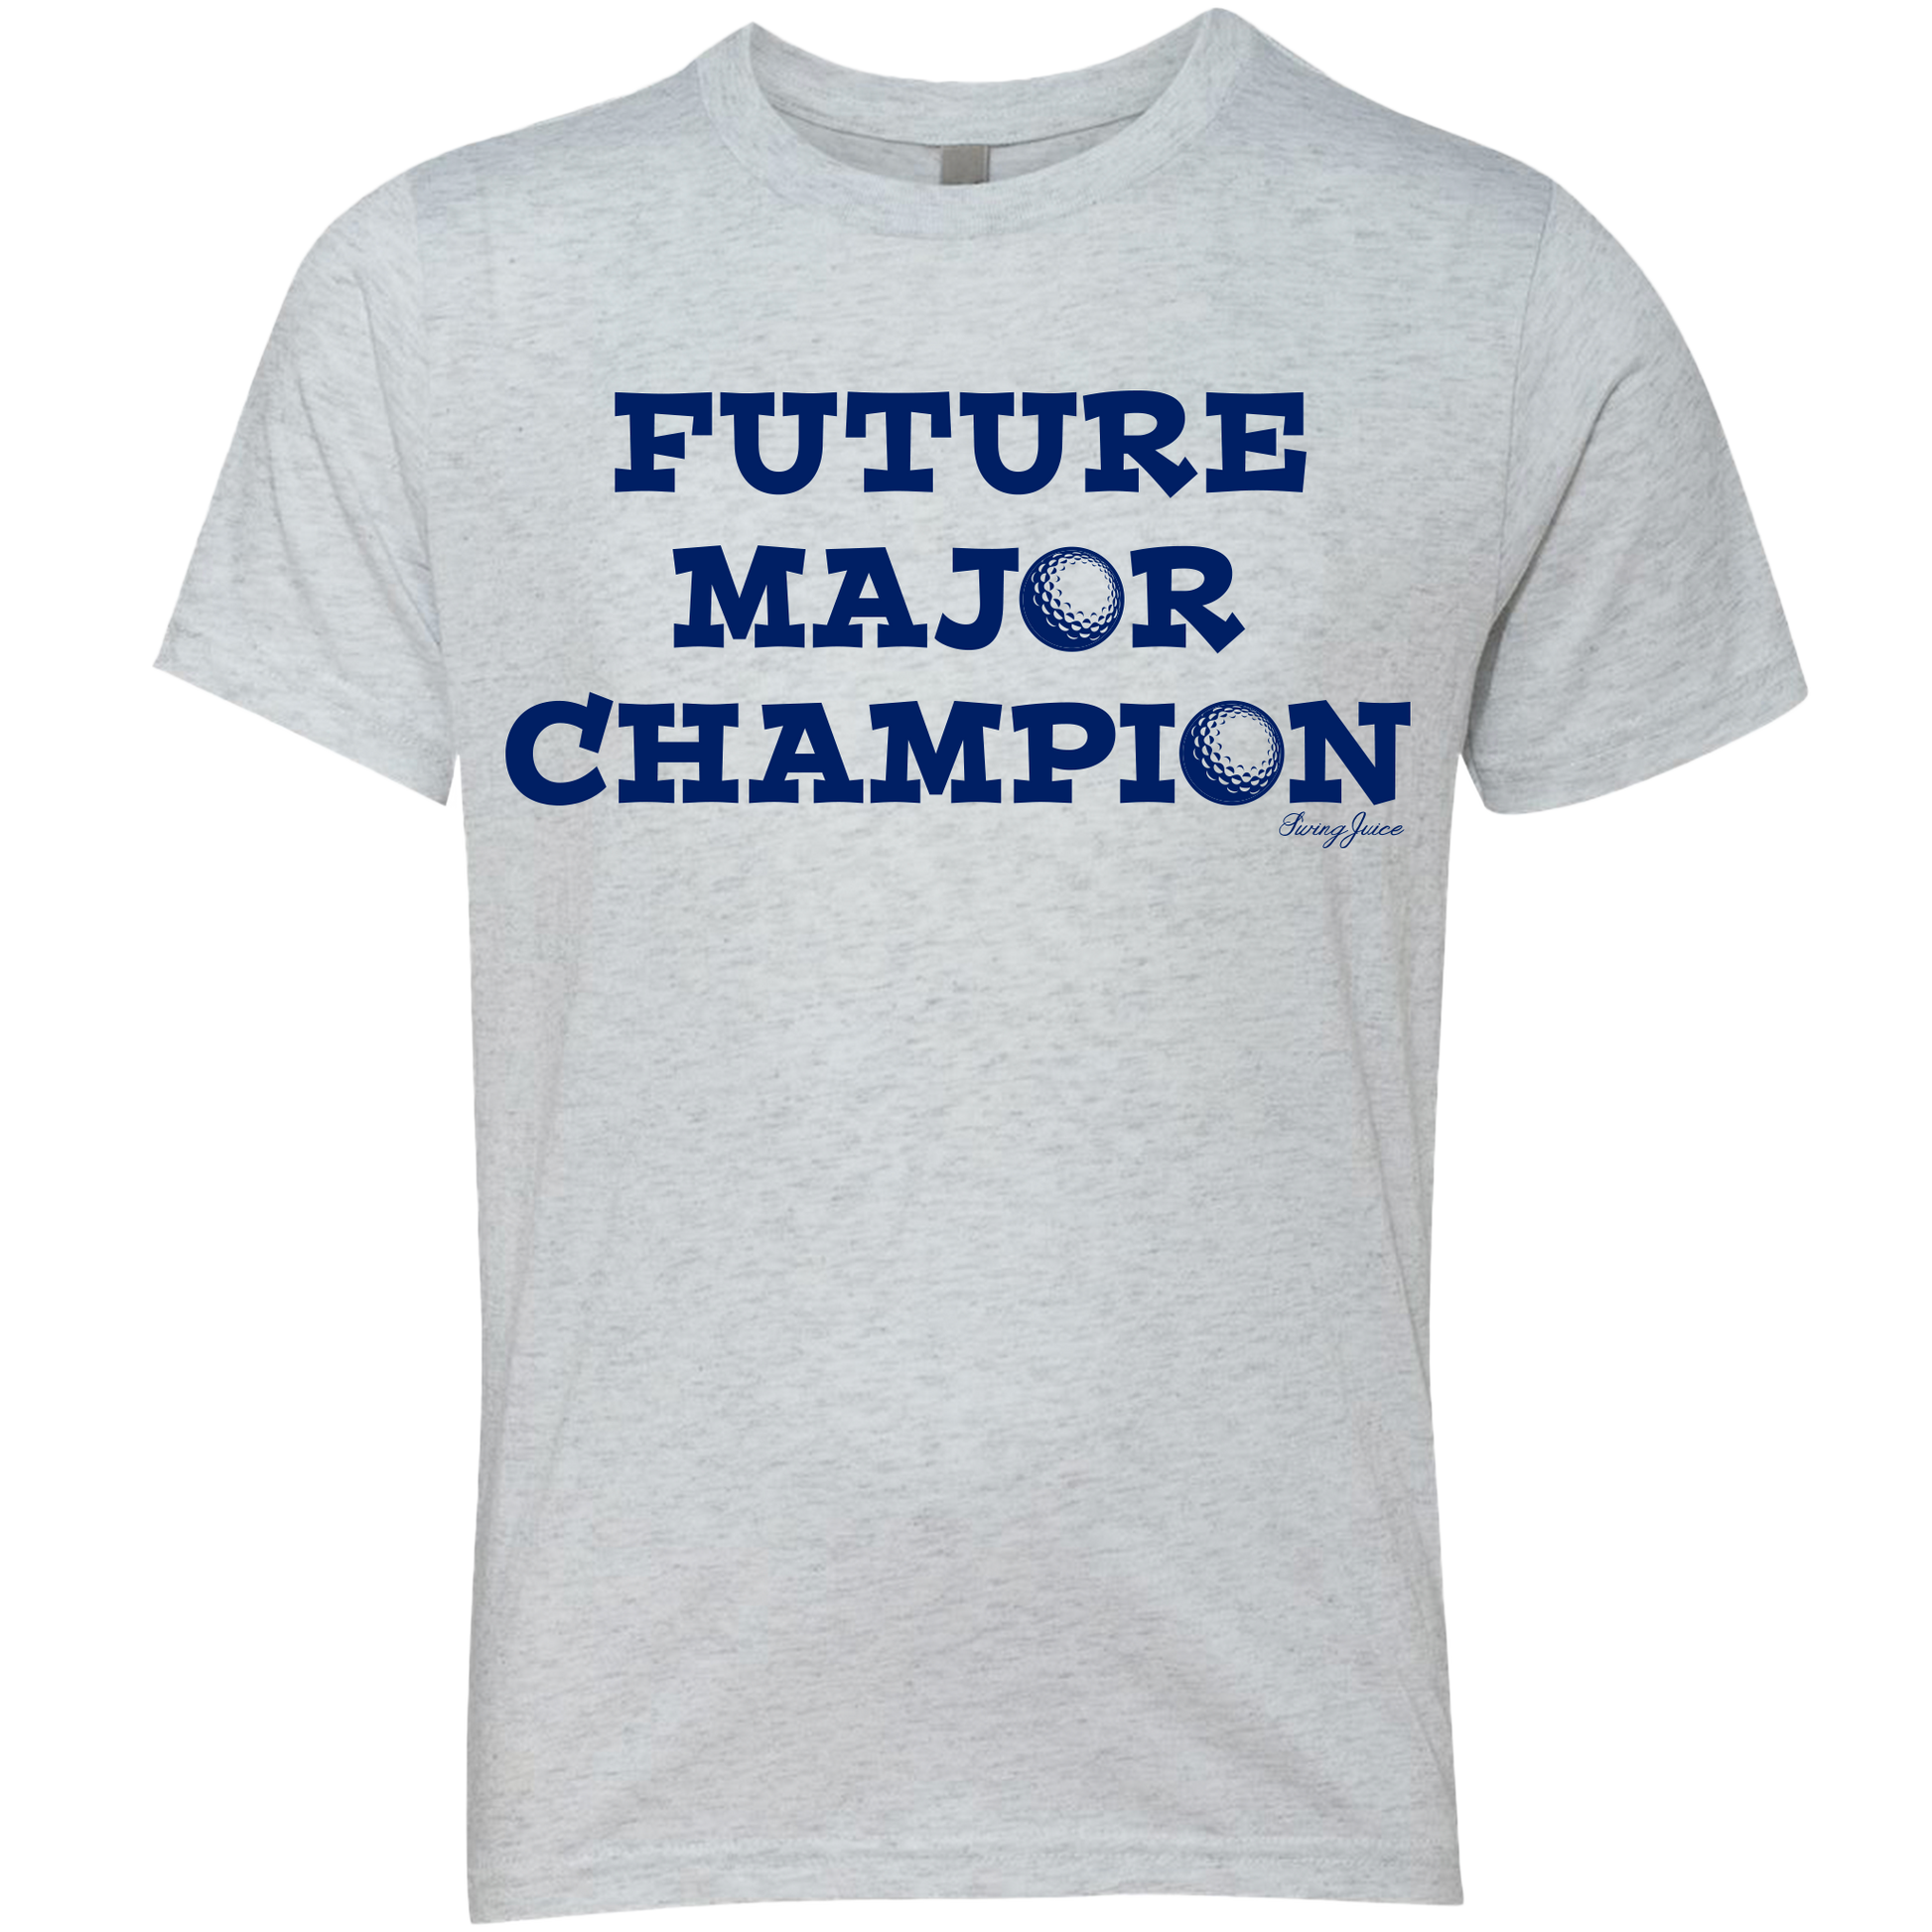 Golf Future Major Champ Kids T-Shirt SwingJuice